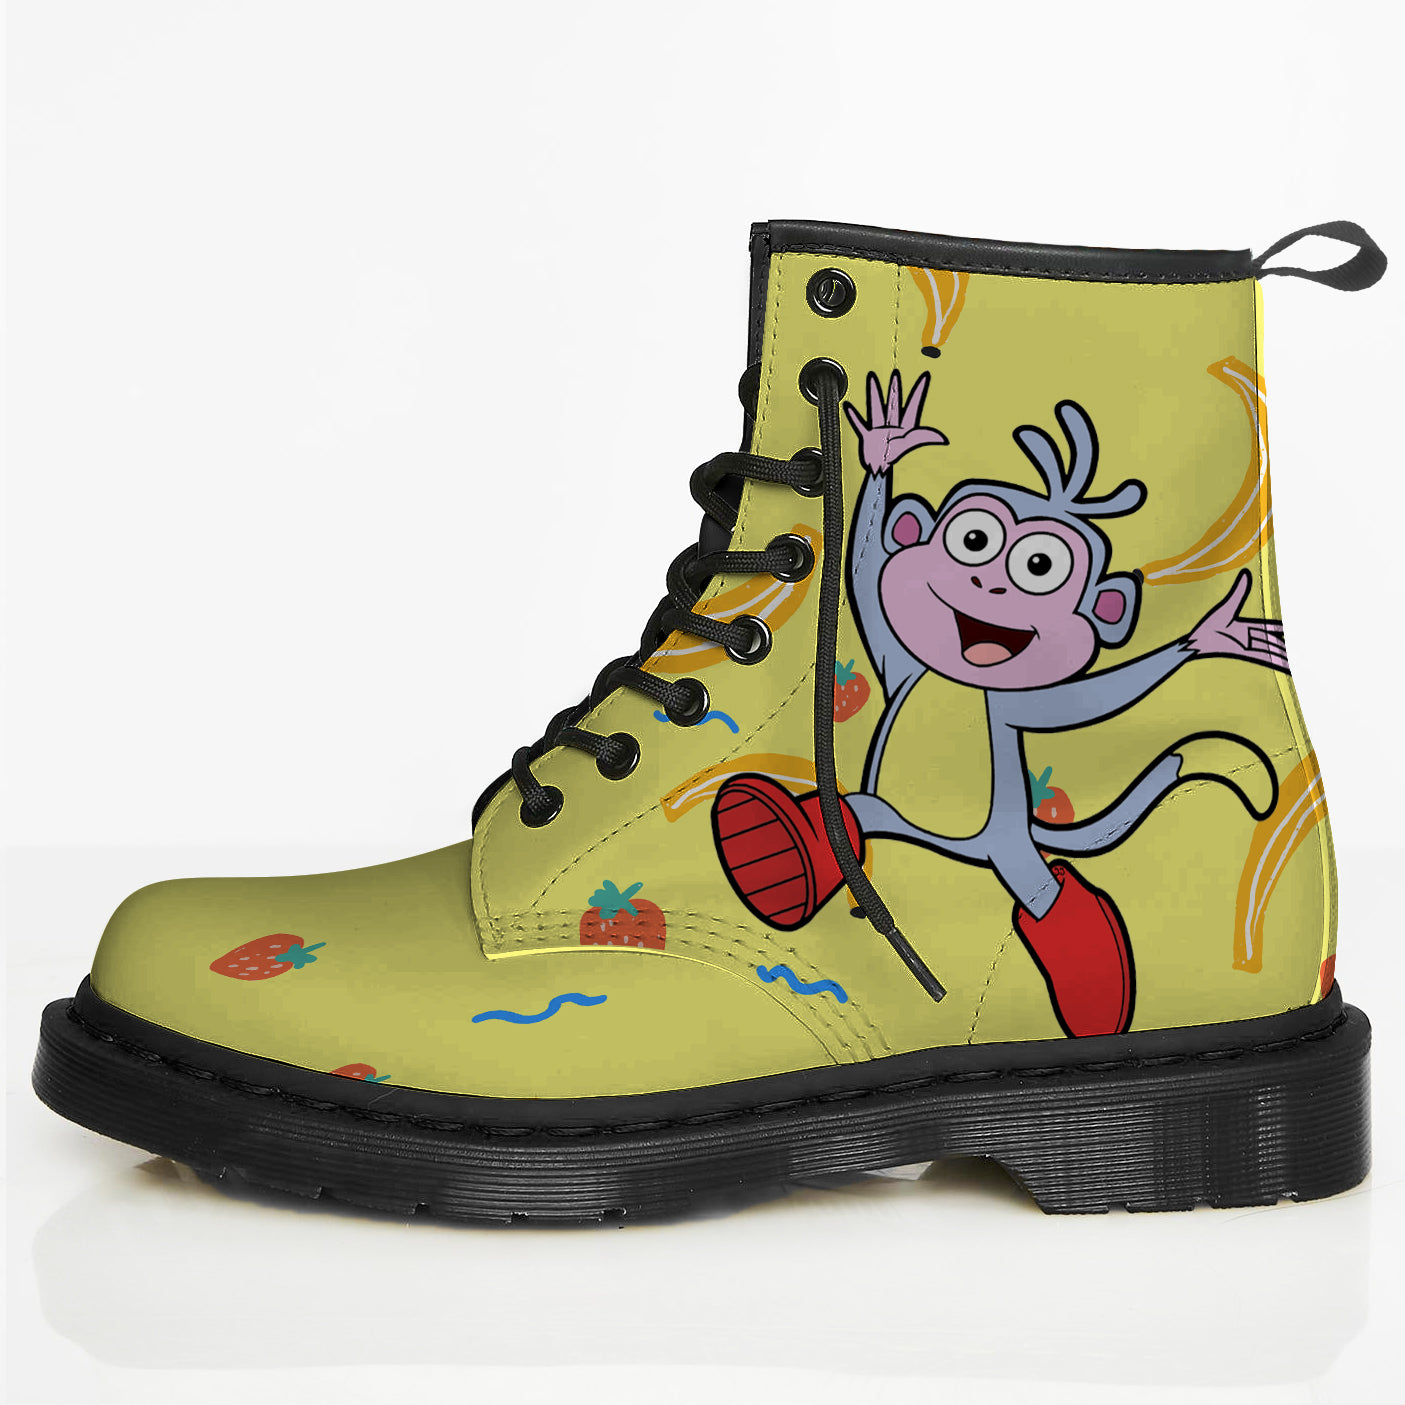 Dora the Explorer Boots the Monkey Boots